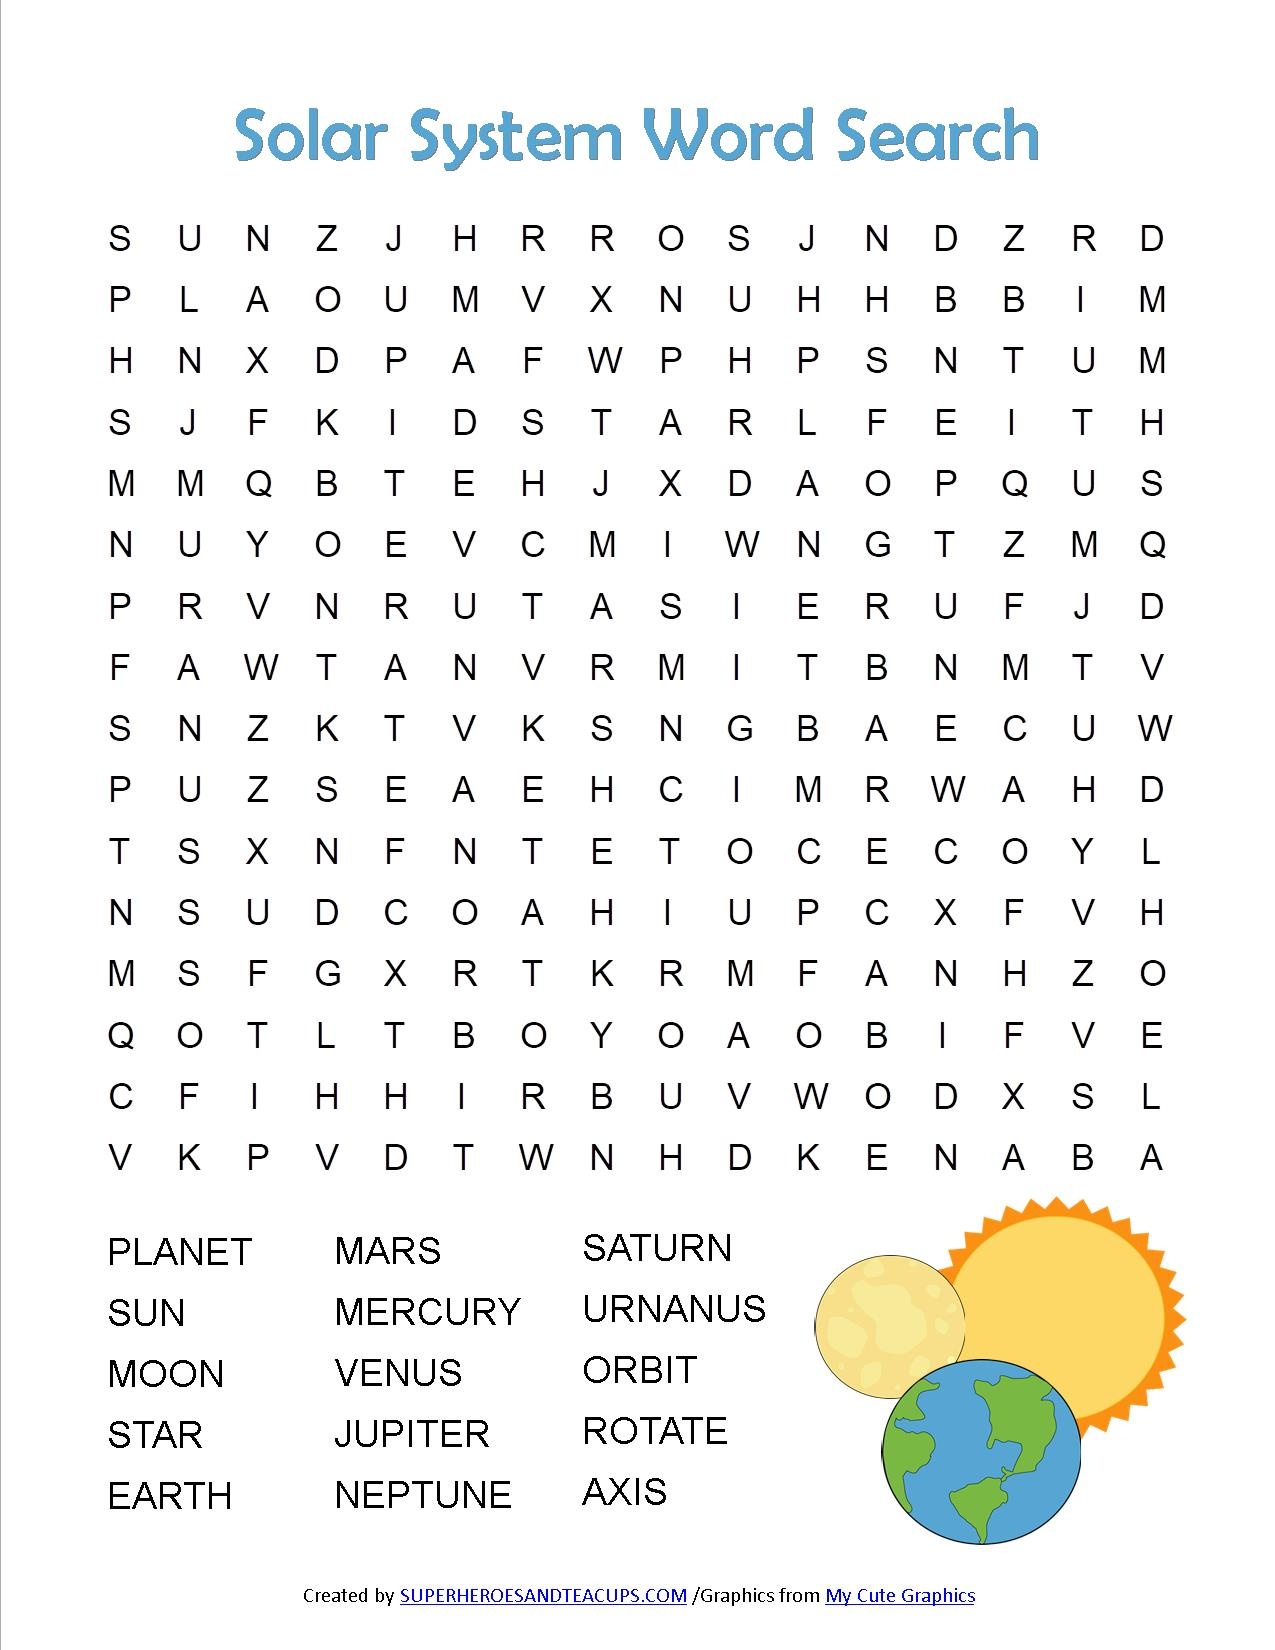 Solar System Word Search Free Printable - Free Printable Sud